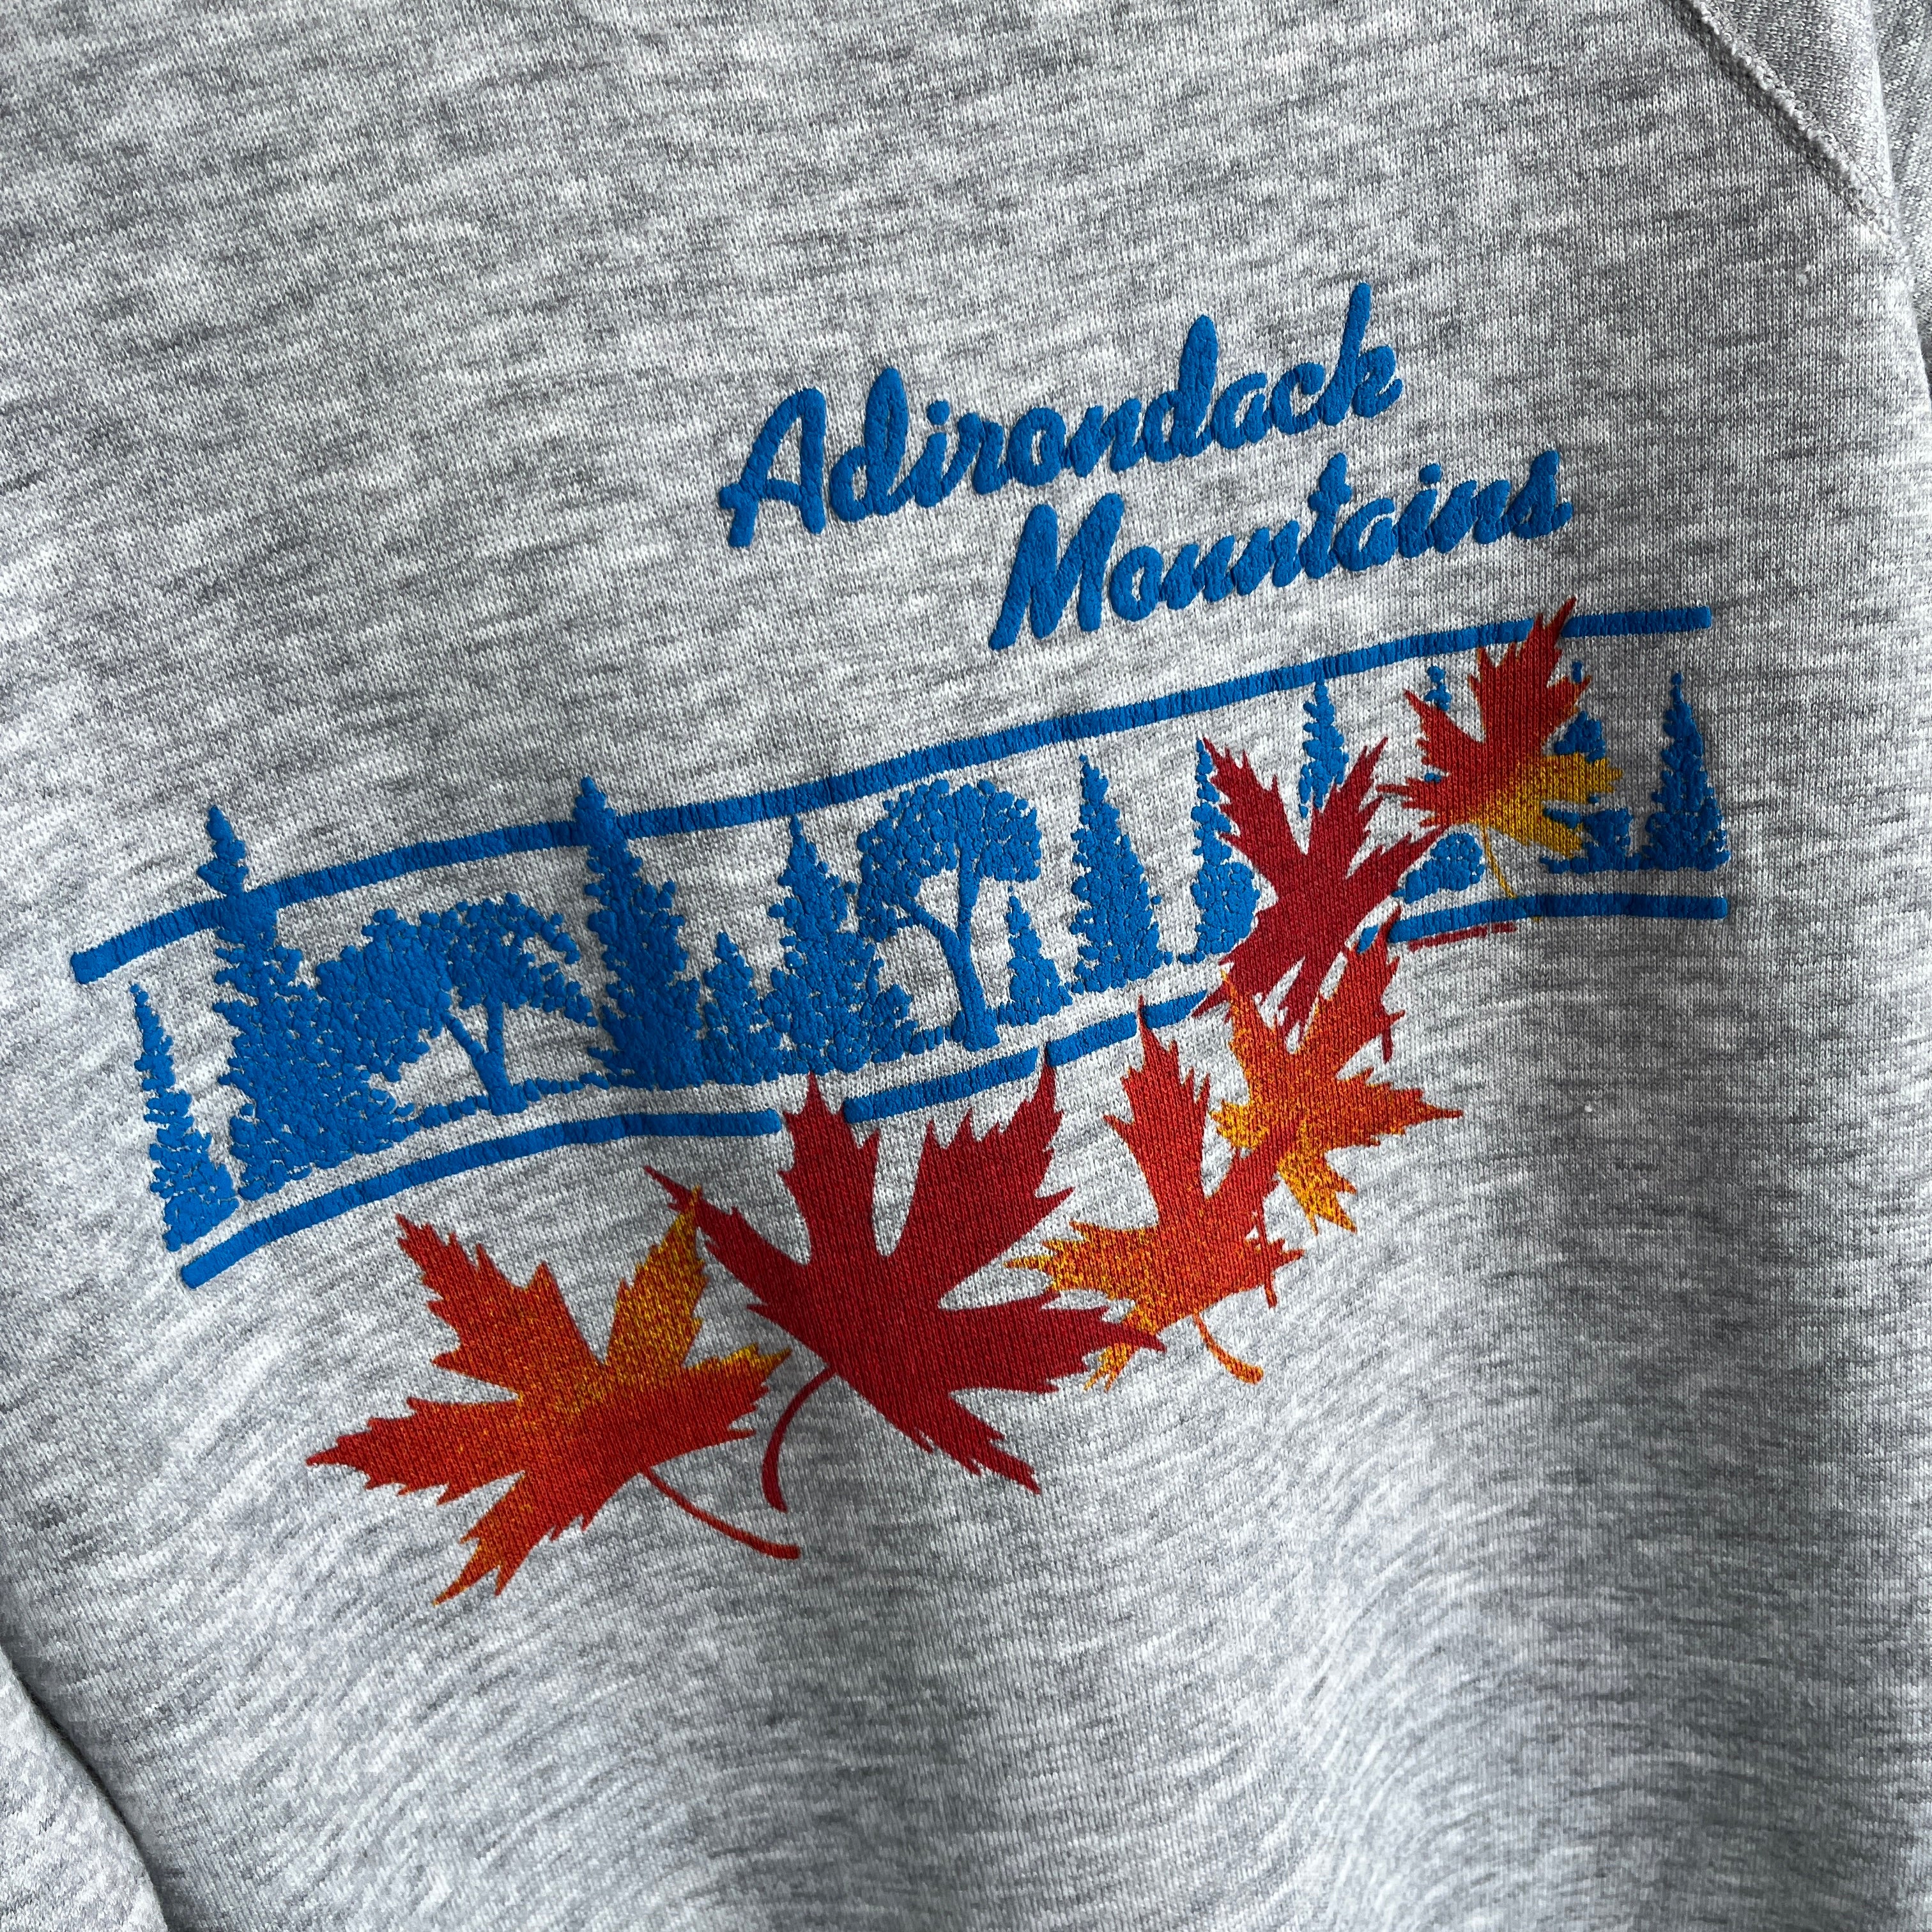 1980s Adirondack Mountains Sweatshirt on a Bassett Walker